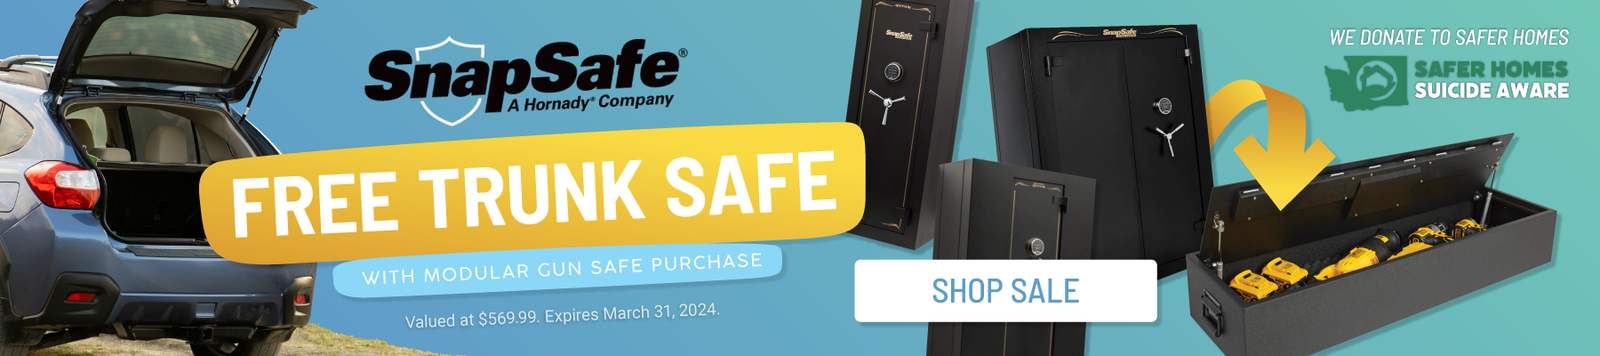 SnapSafe Free Trunk Safe with Modular Gun Safe Purchase